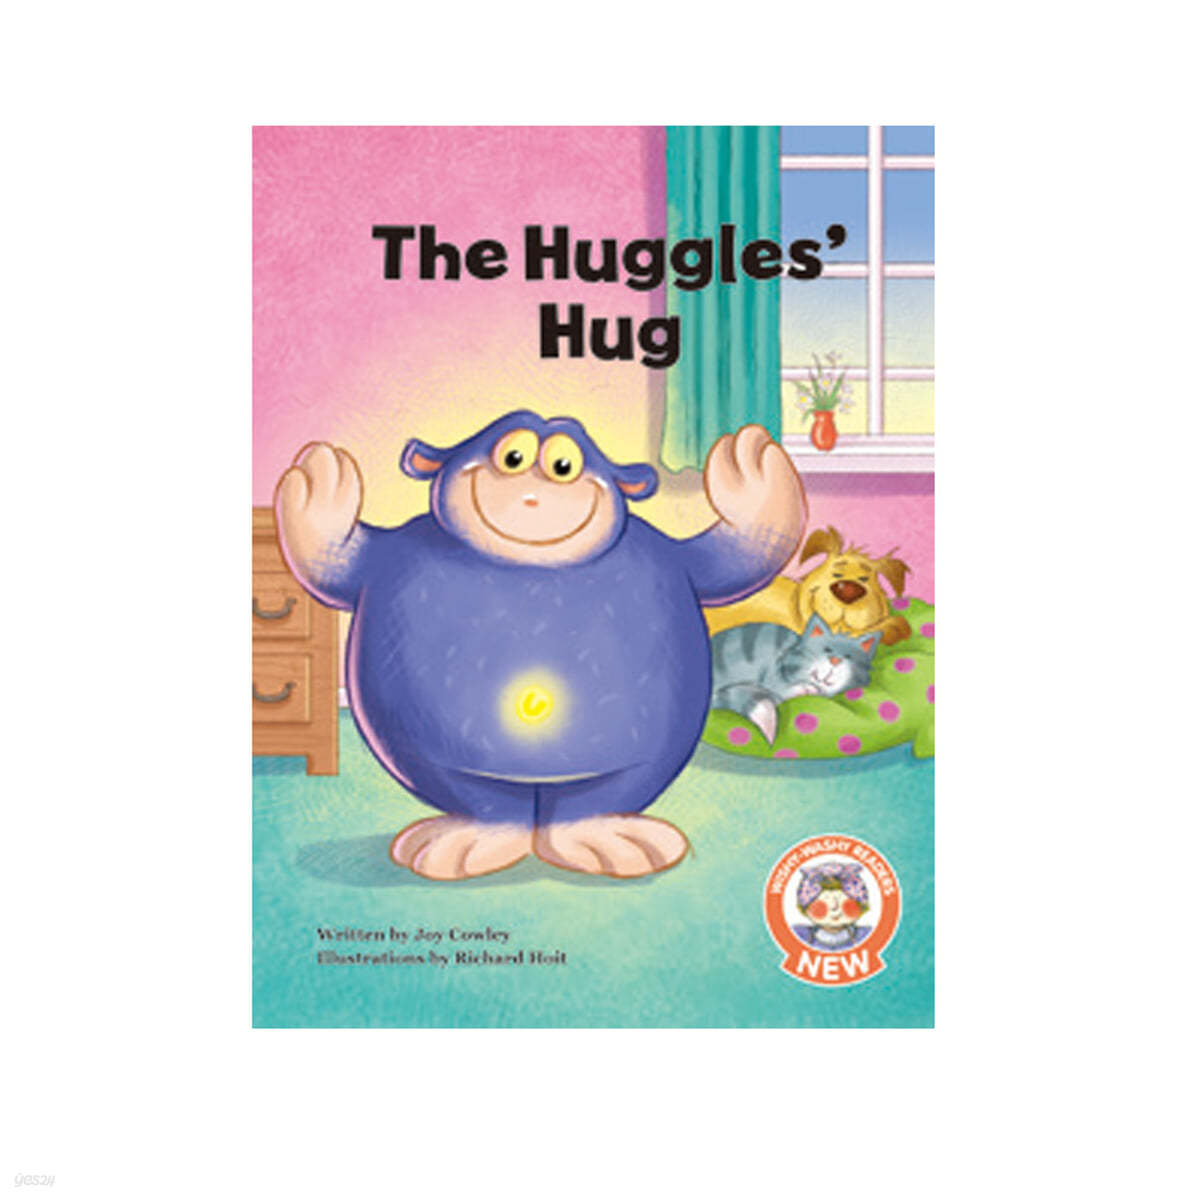 (The)huggles' hug